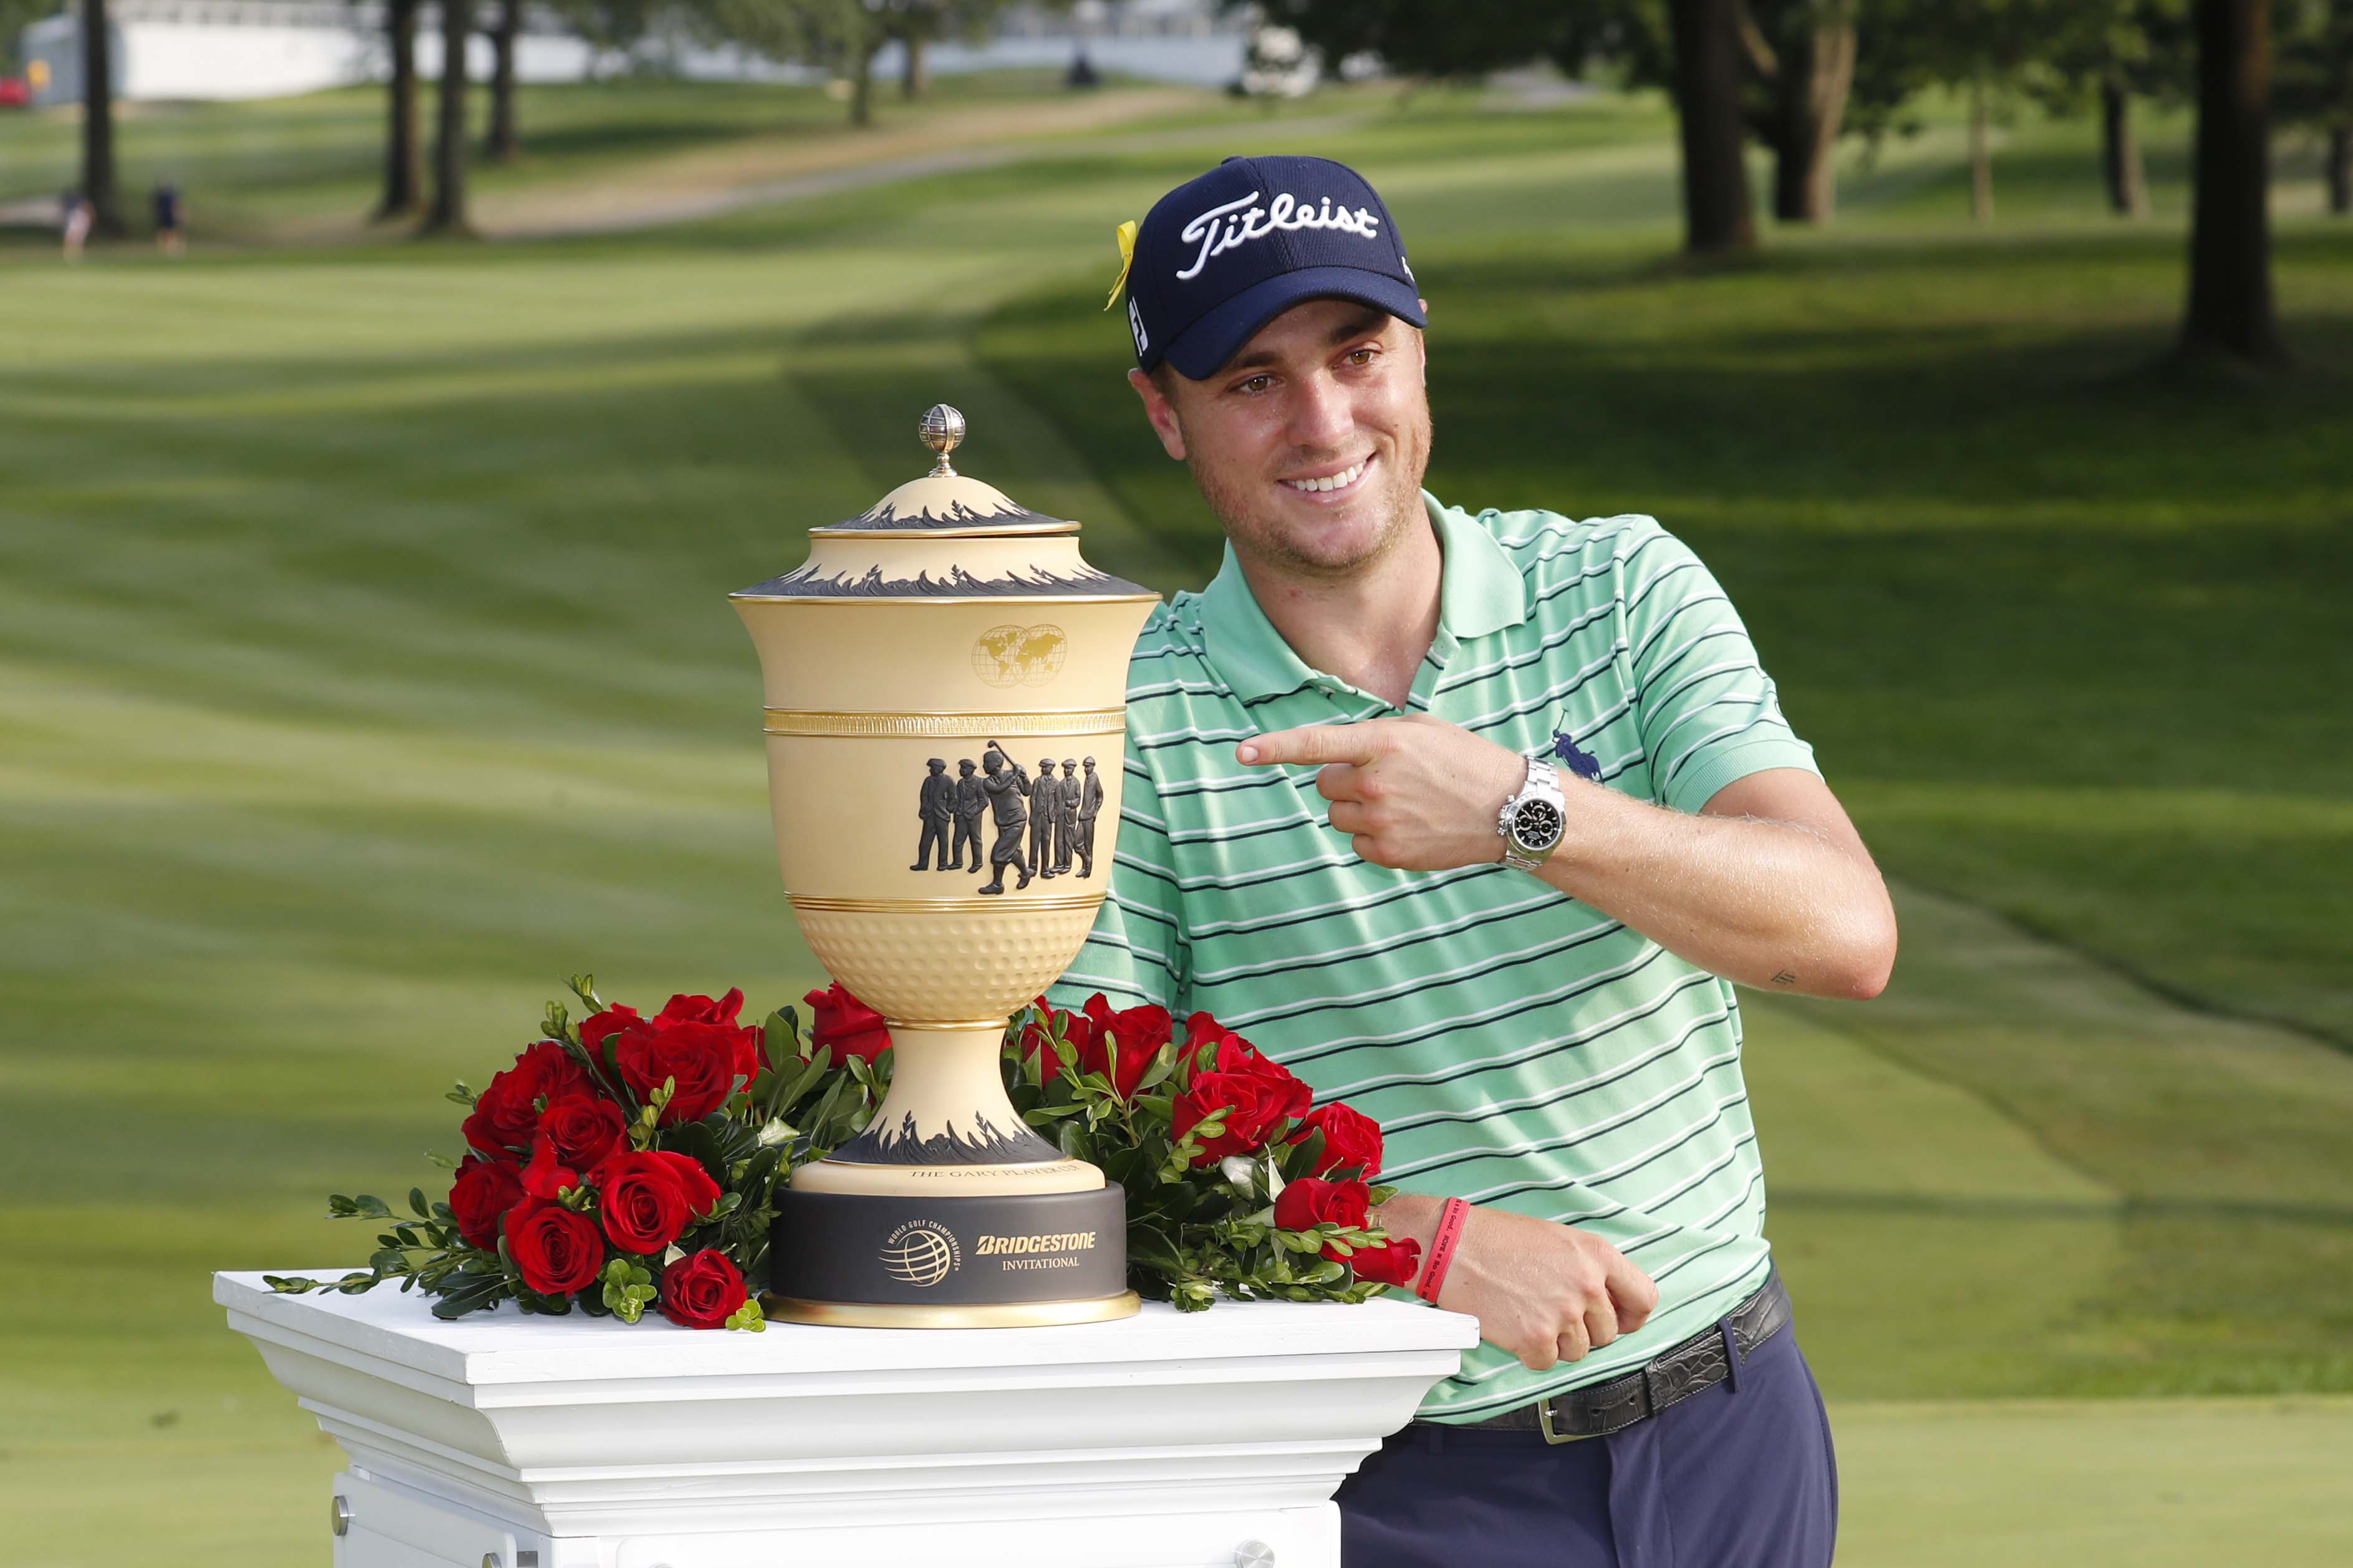 Golf: Thomas wins WGC-Bridgestone Invitational in dominant style